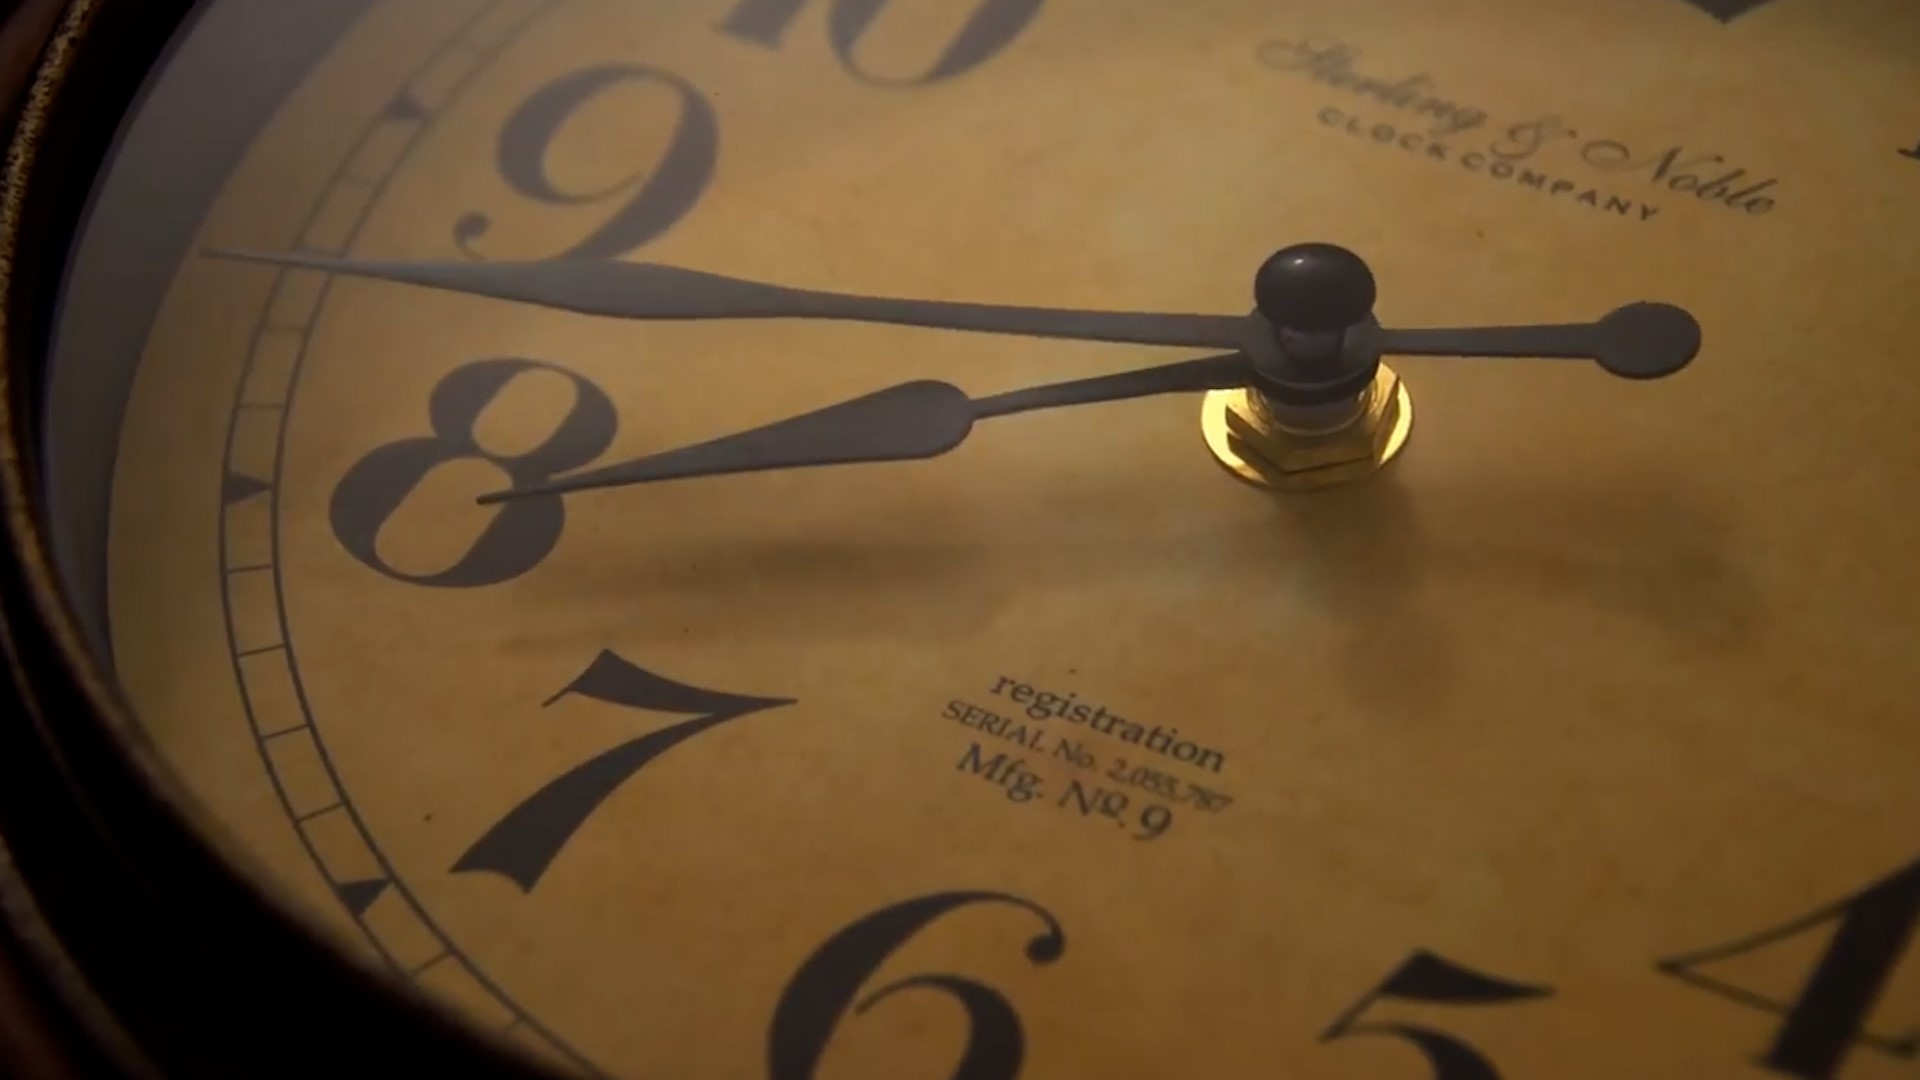 The Strange 100-Year History of Daylight Saving Time